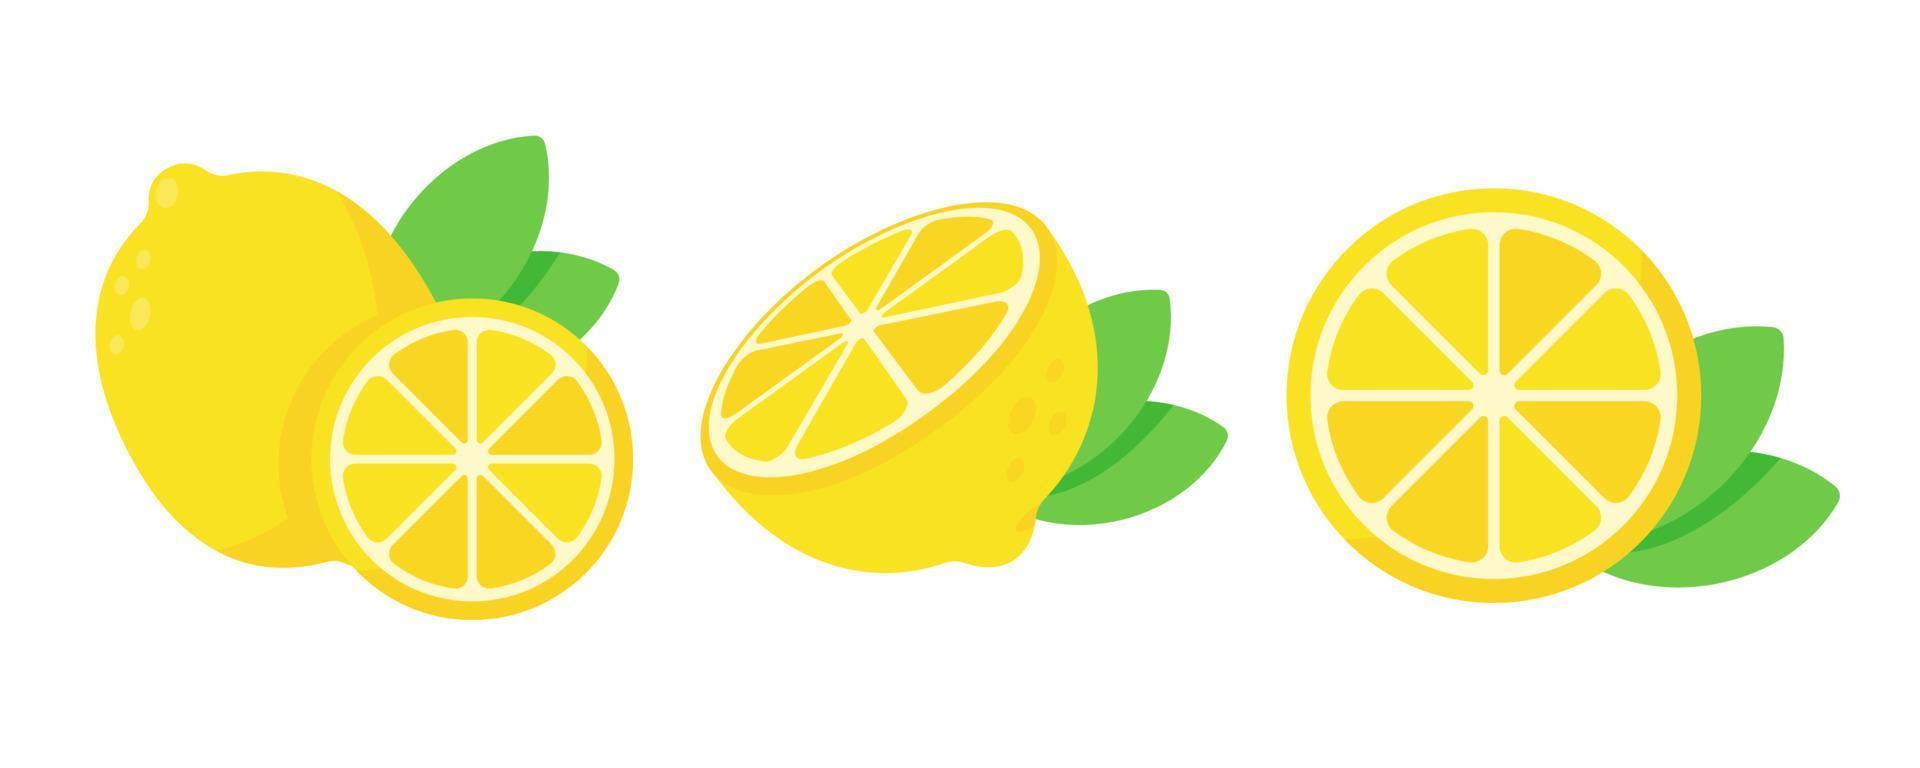 limón amarillo agrio para cocinar y jugo de limón vector